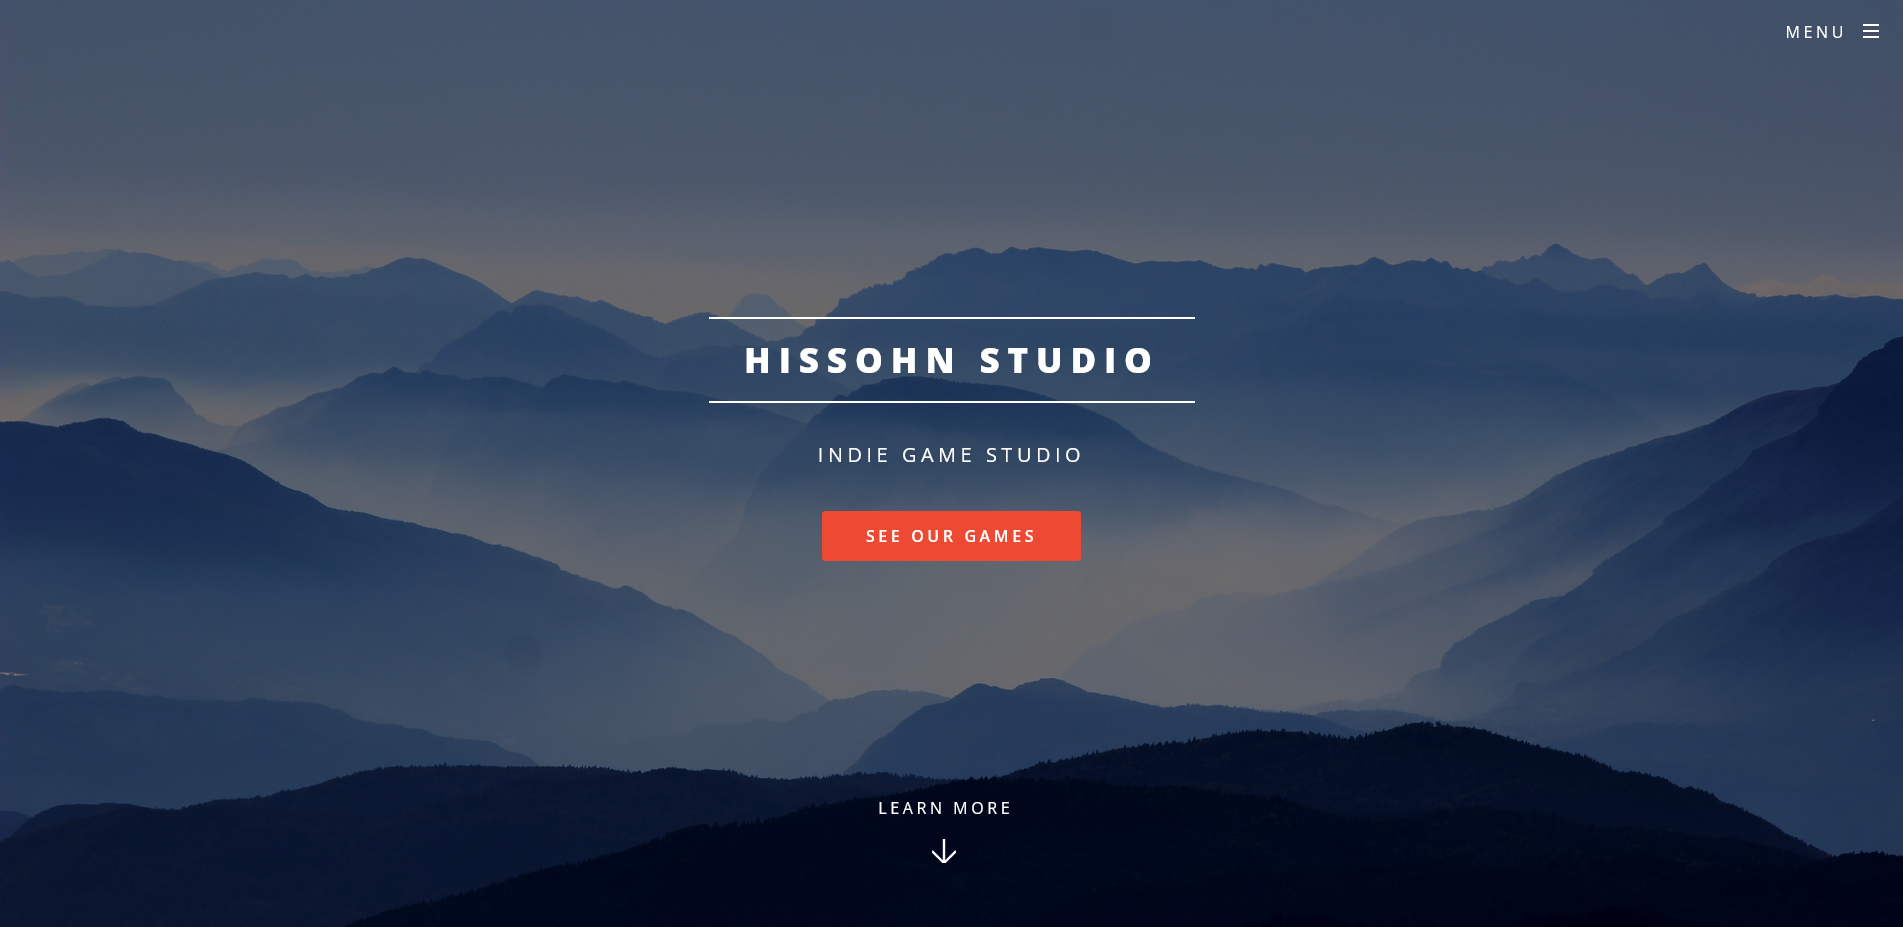 HisSohn Studio Website